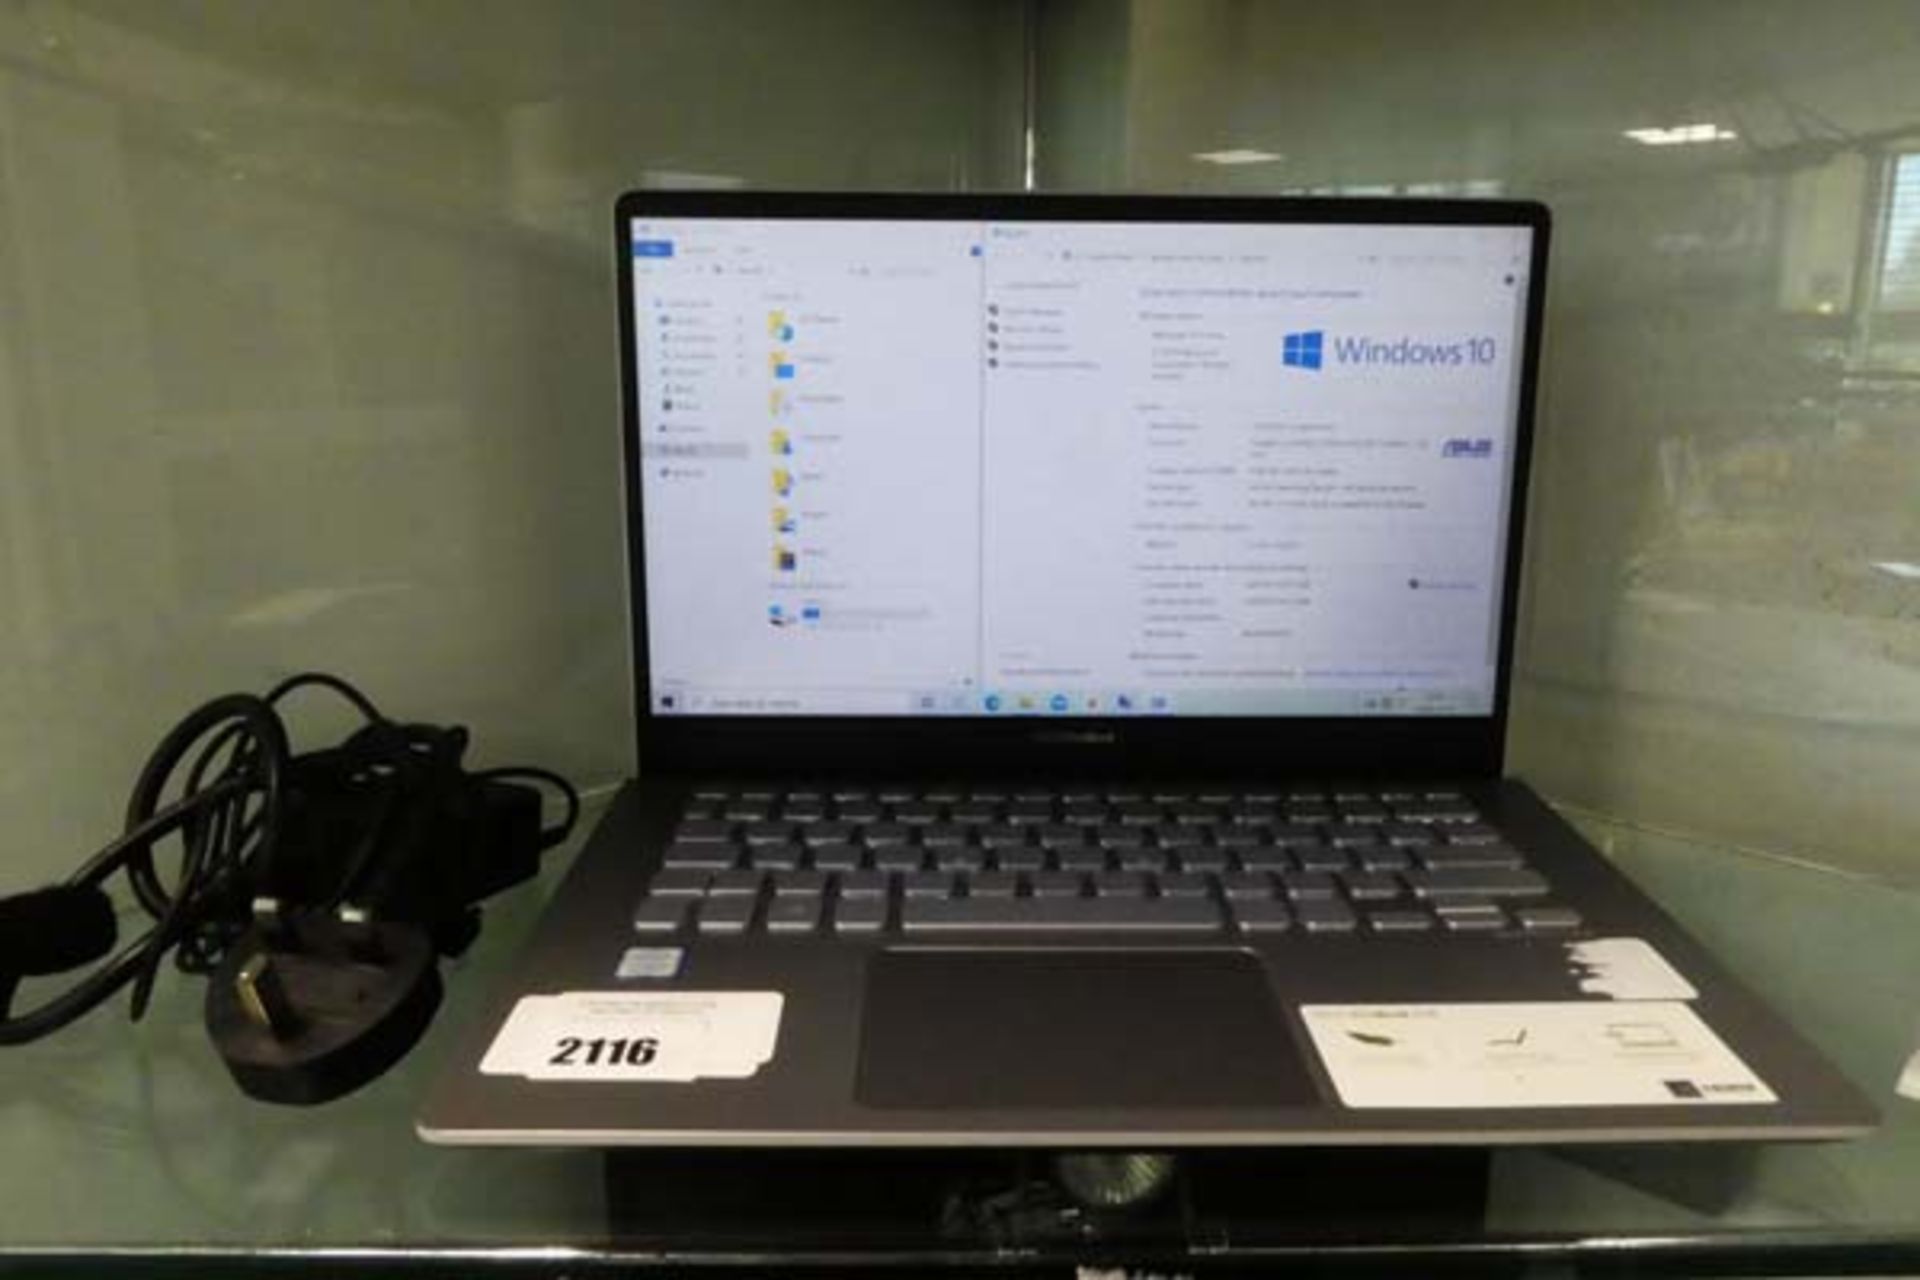 2080 - Asus Vivobook laptop core i3 8th gen processor, 4gb ram, 256gb storage, Windows 10 installed,